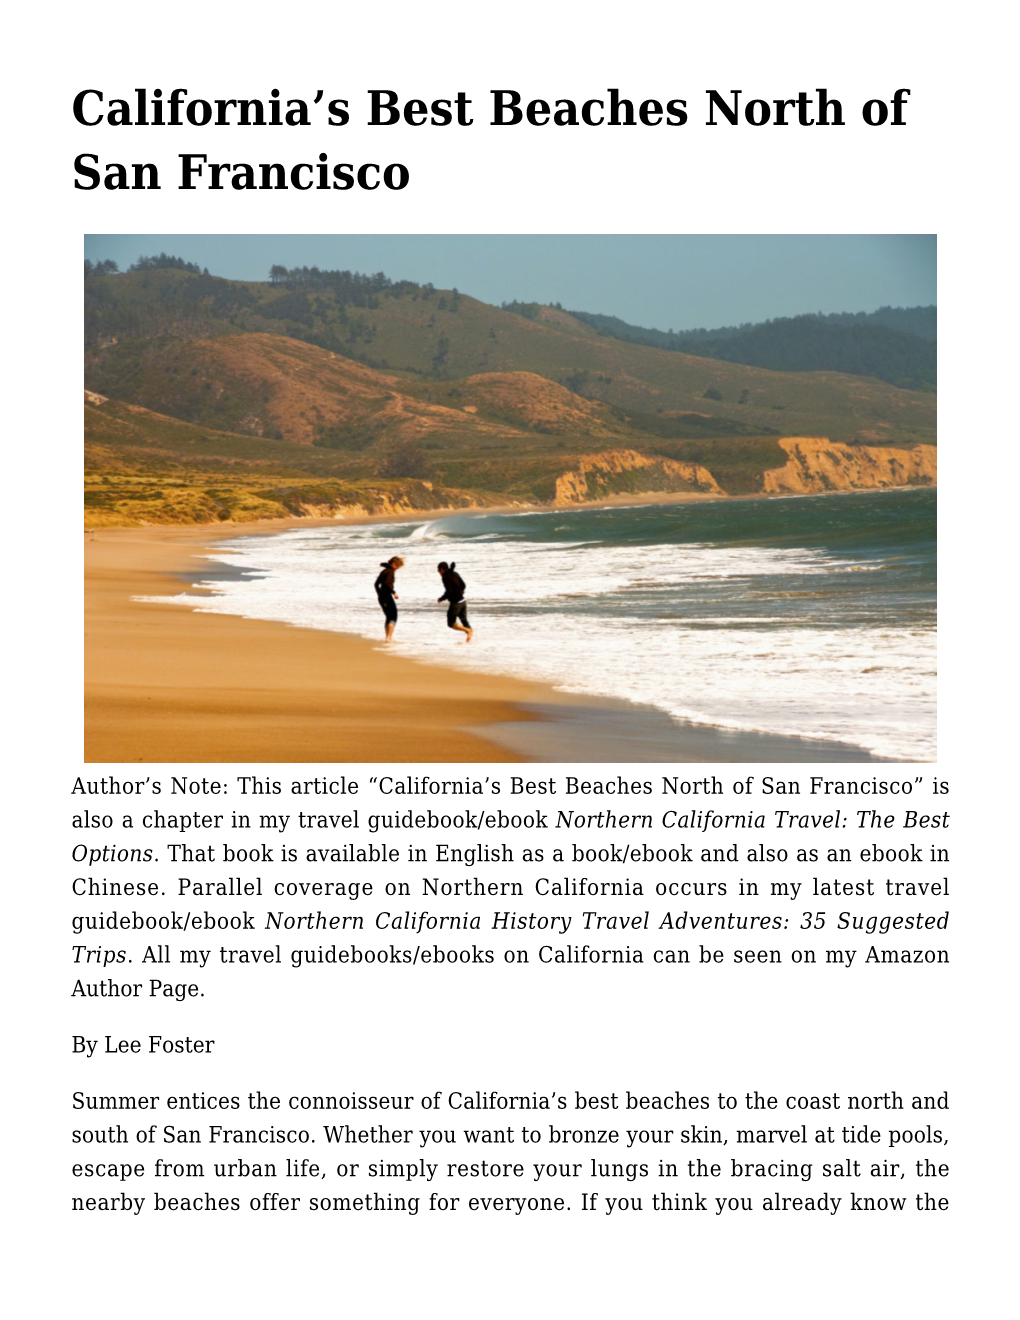 California's Best Beaches North of San Francisco